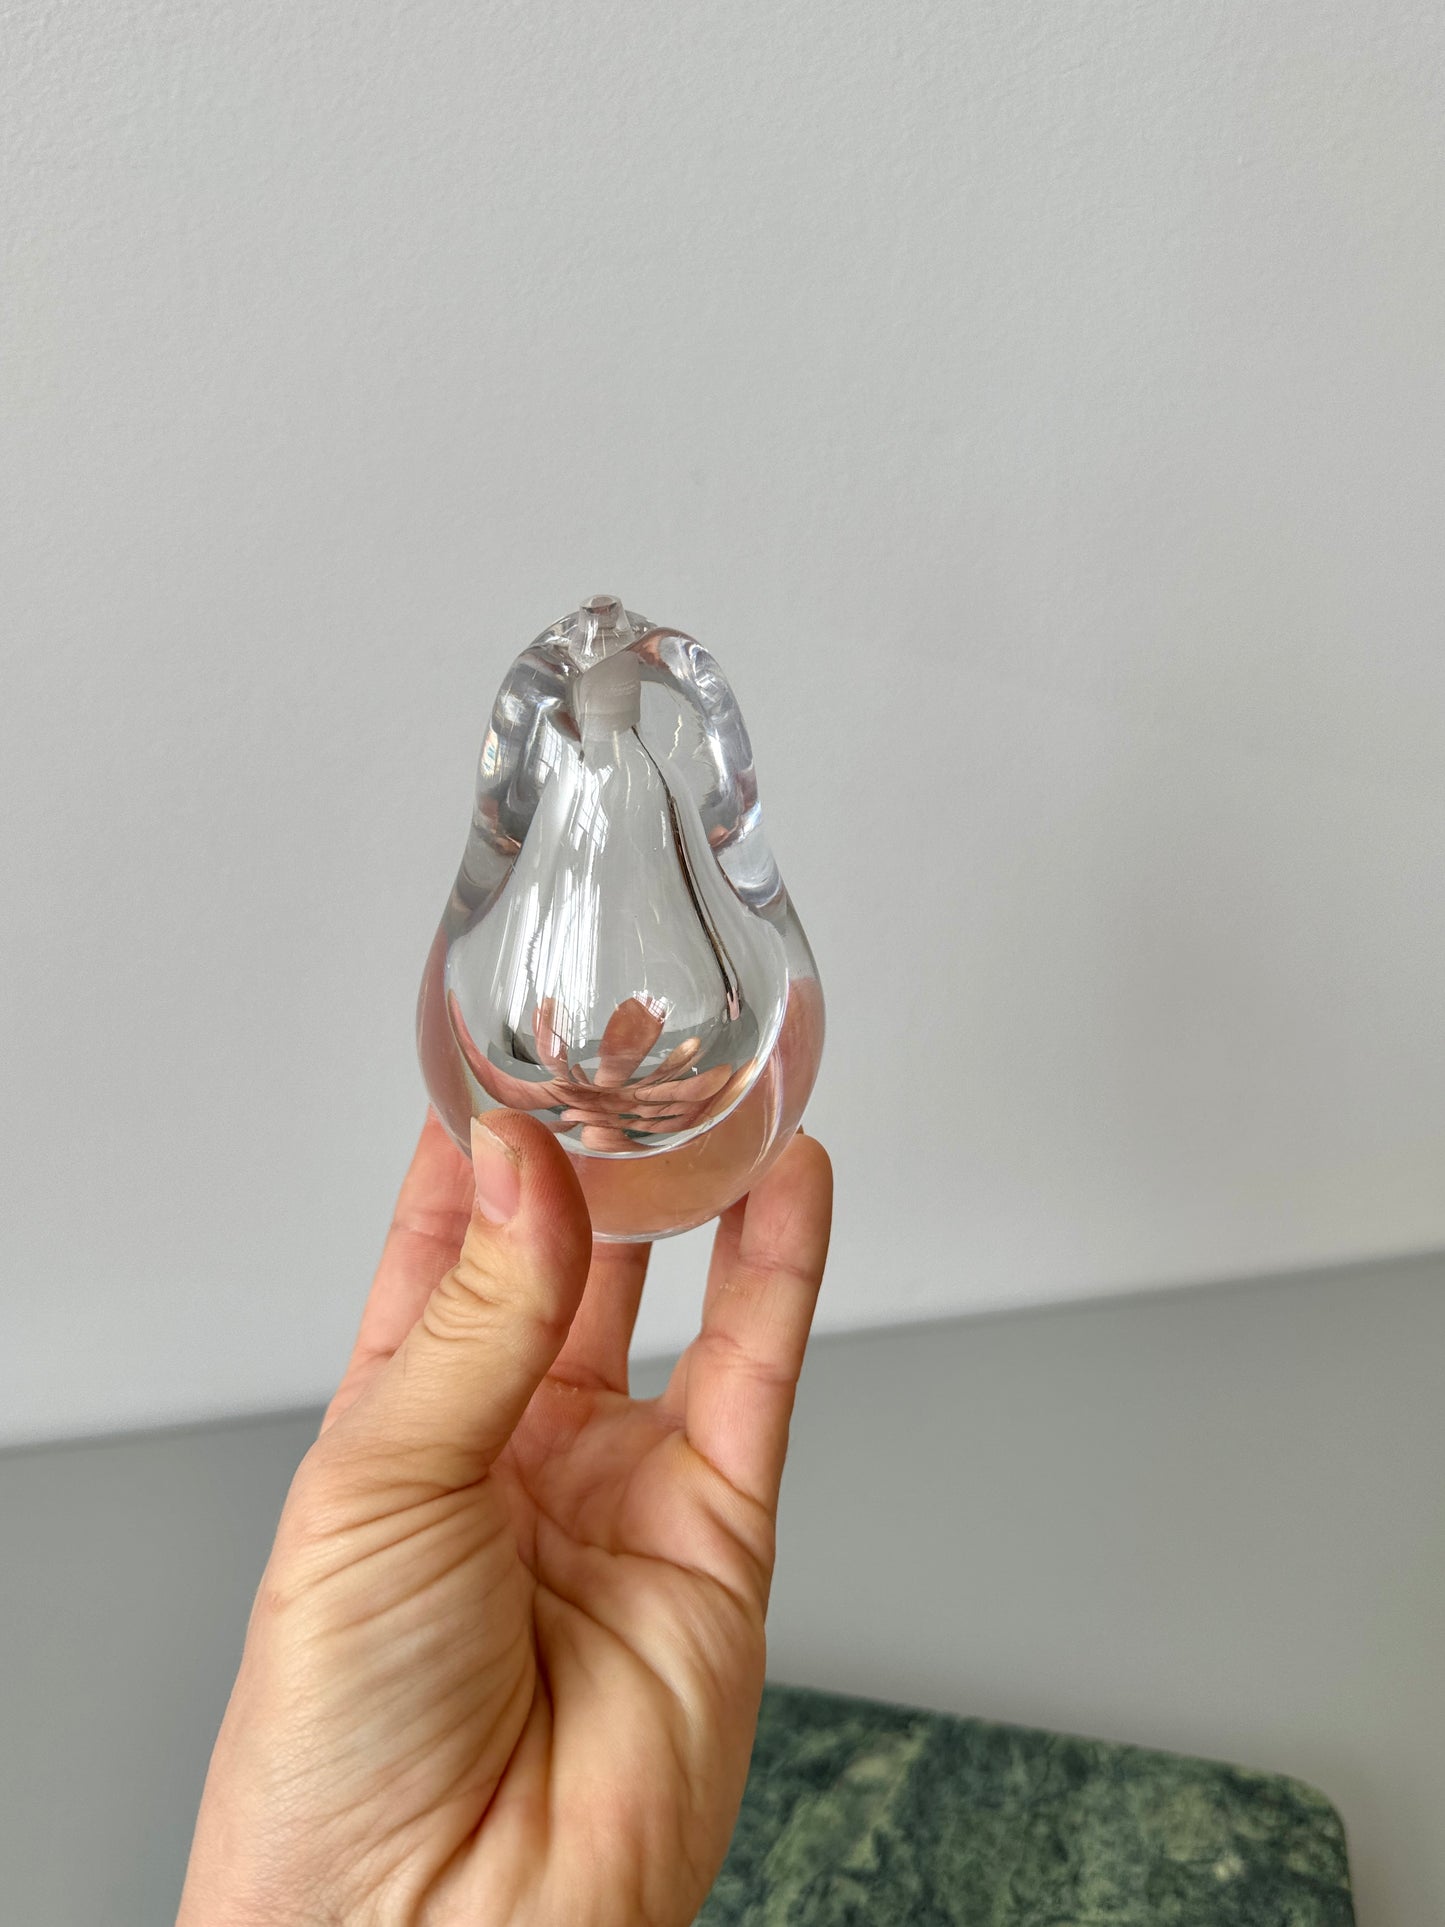 Vintage Kosa Boda Crystal Pear